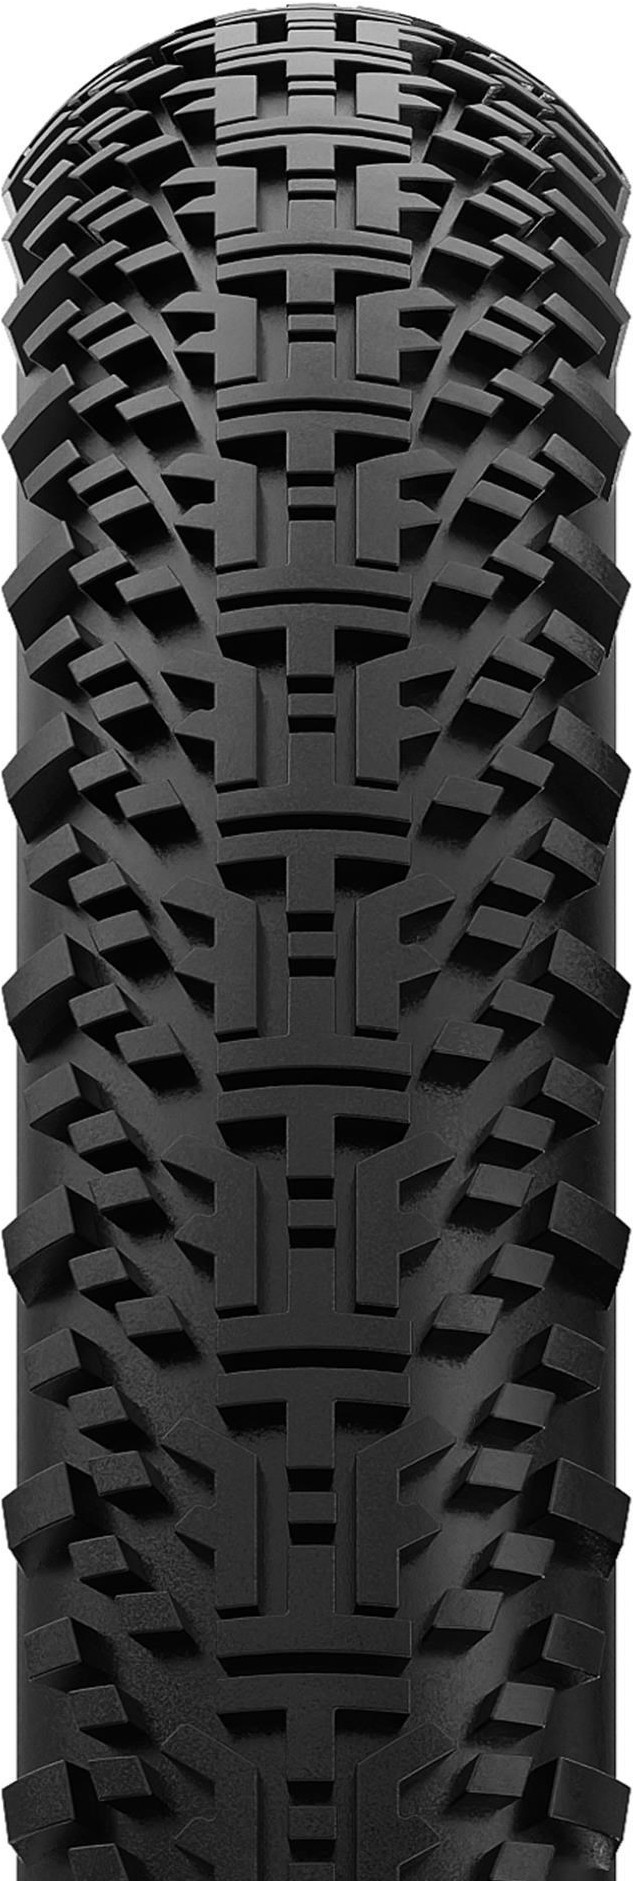 Gravelking X1 Plus TLR 700c Gravel Tyre image 1